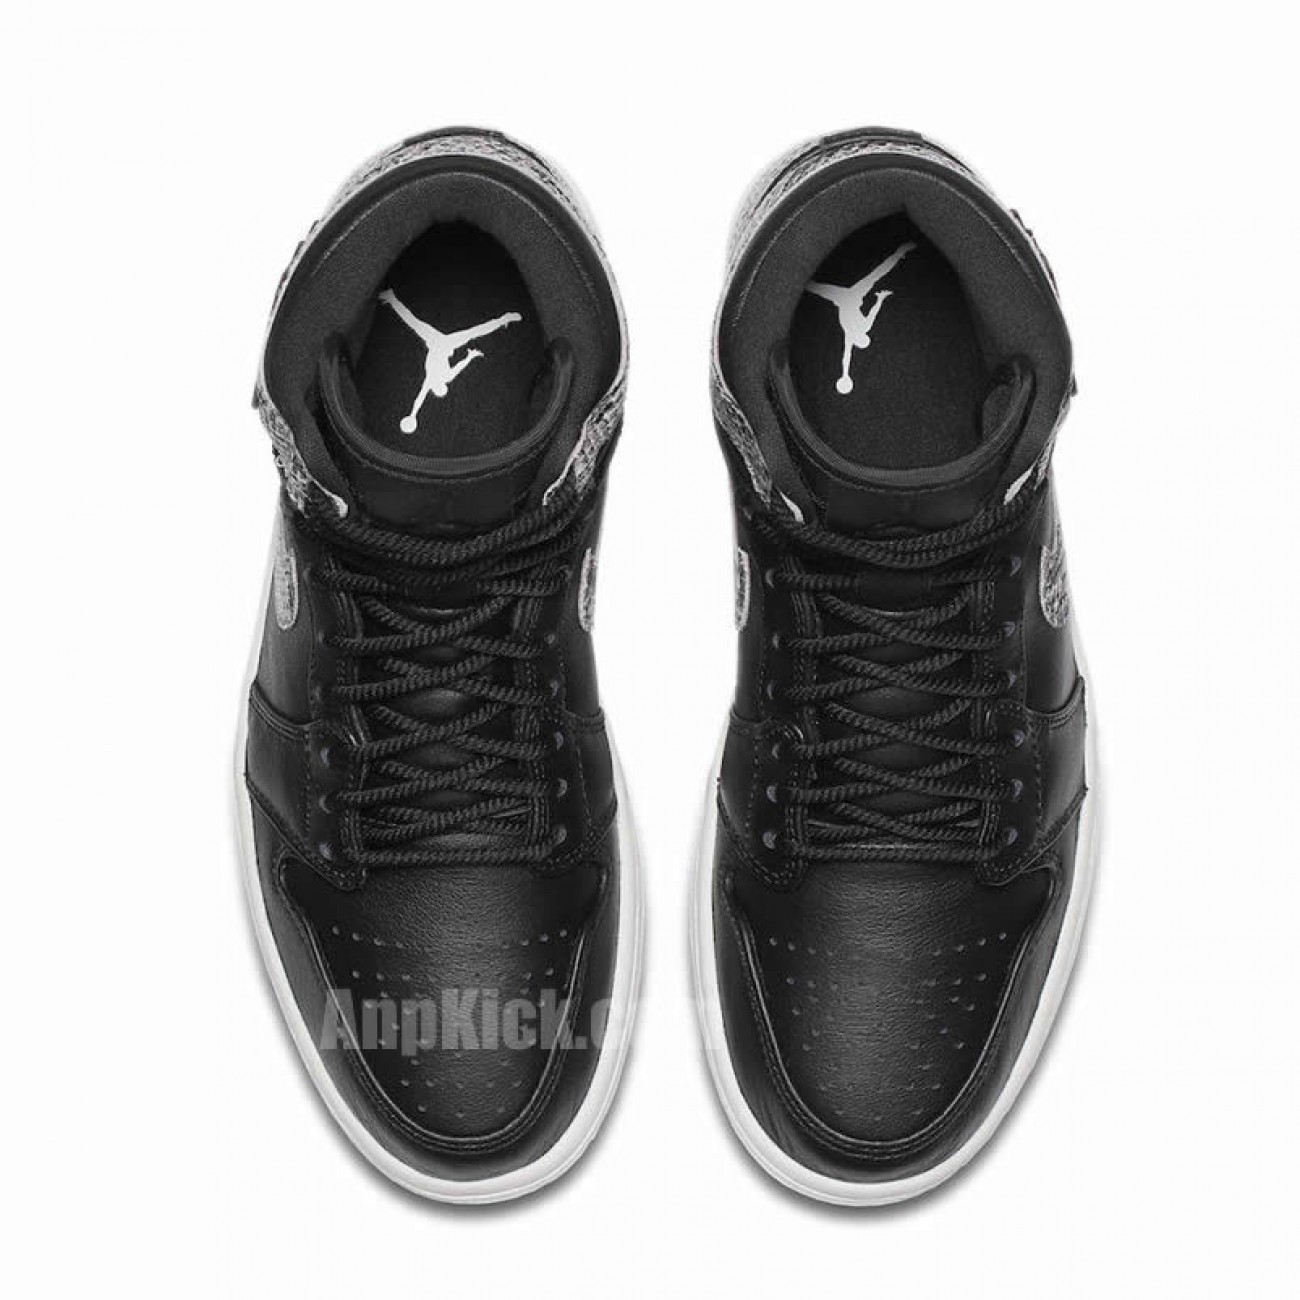 Air Jordan 1 Retro High "Snakeskin" Black Shoes AH7389-004